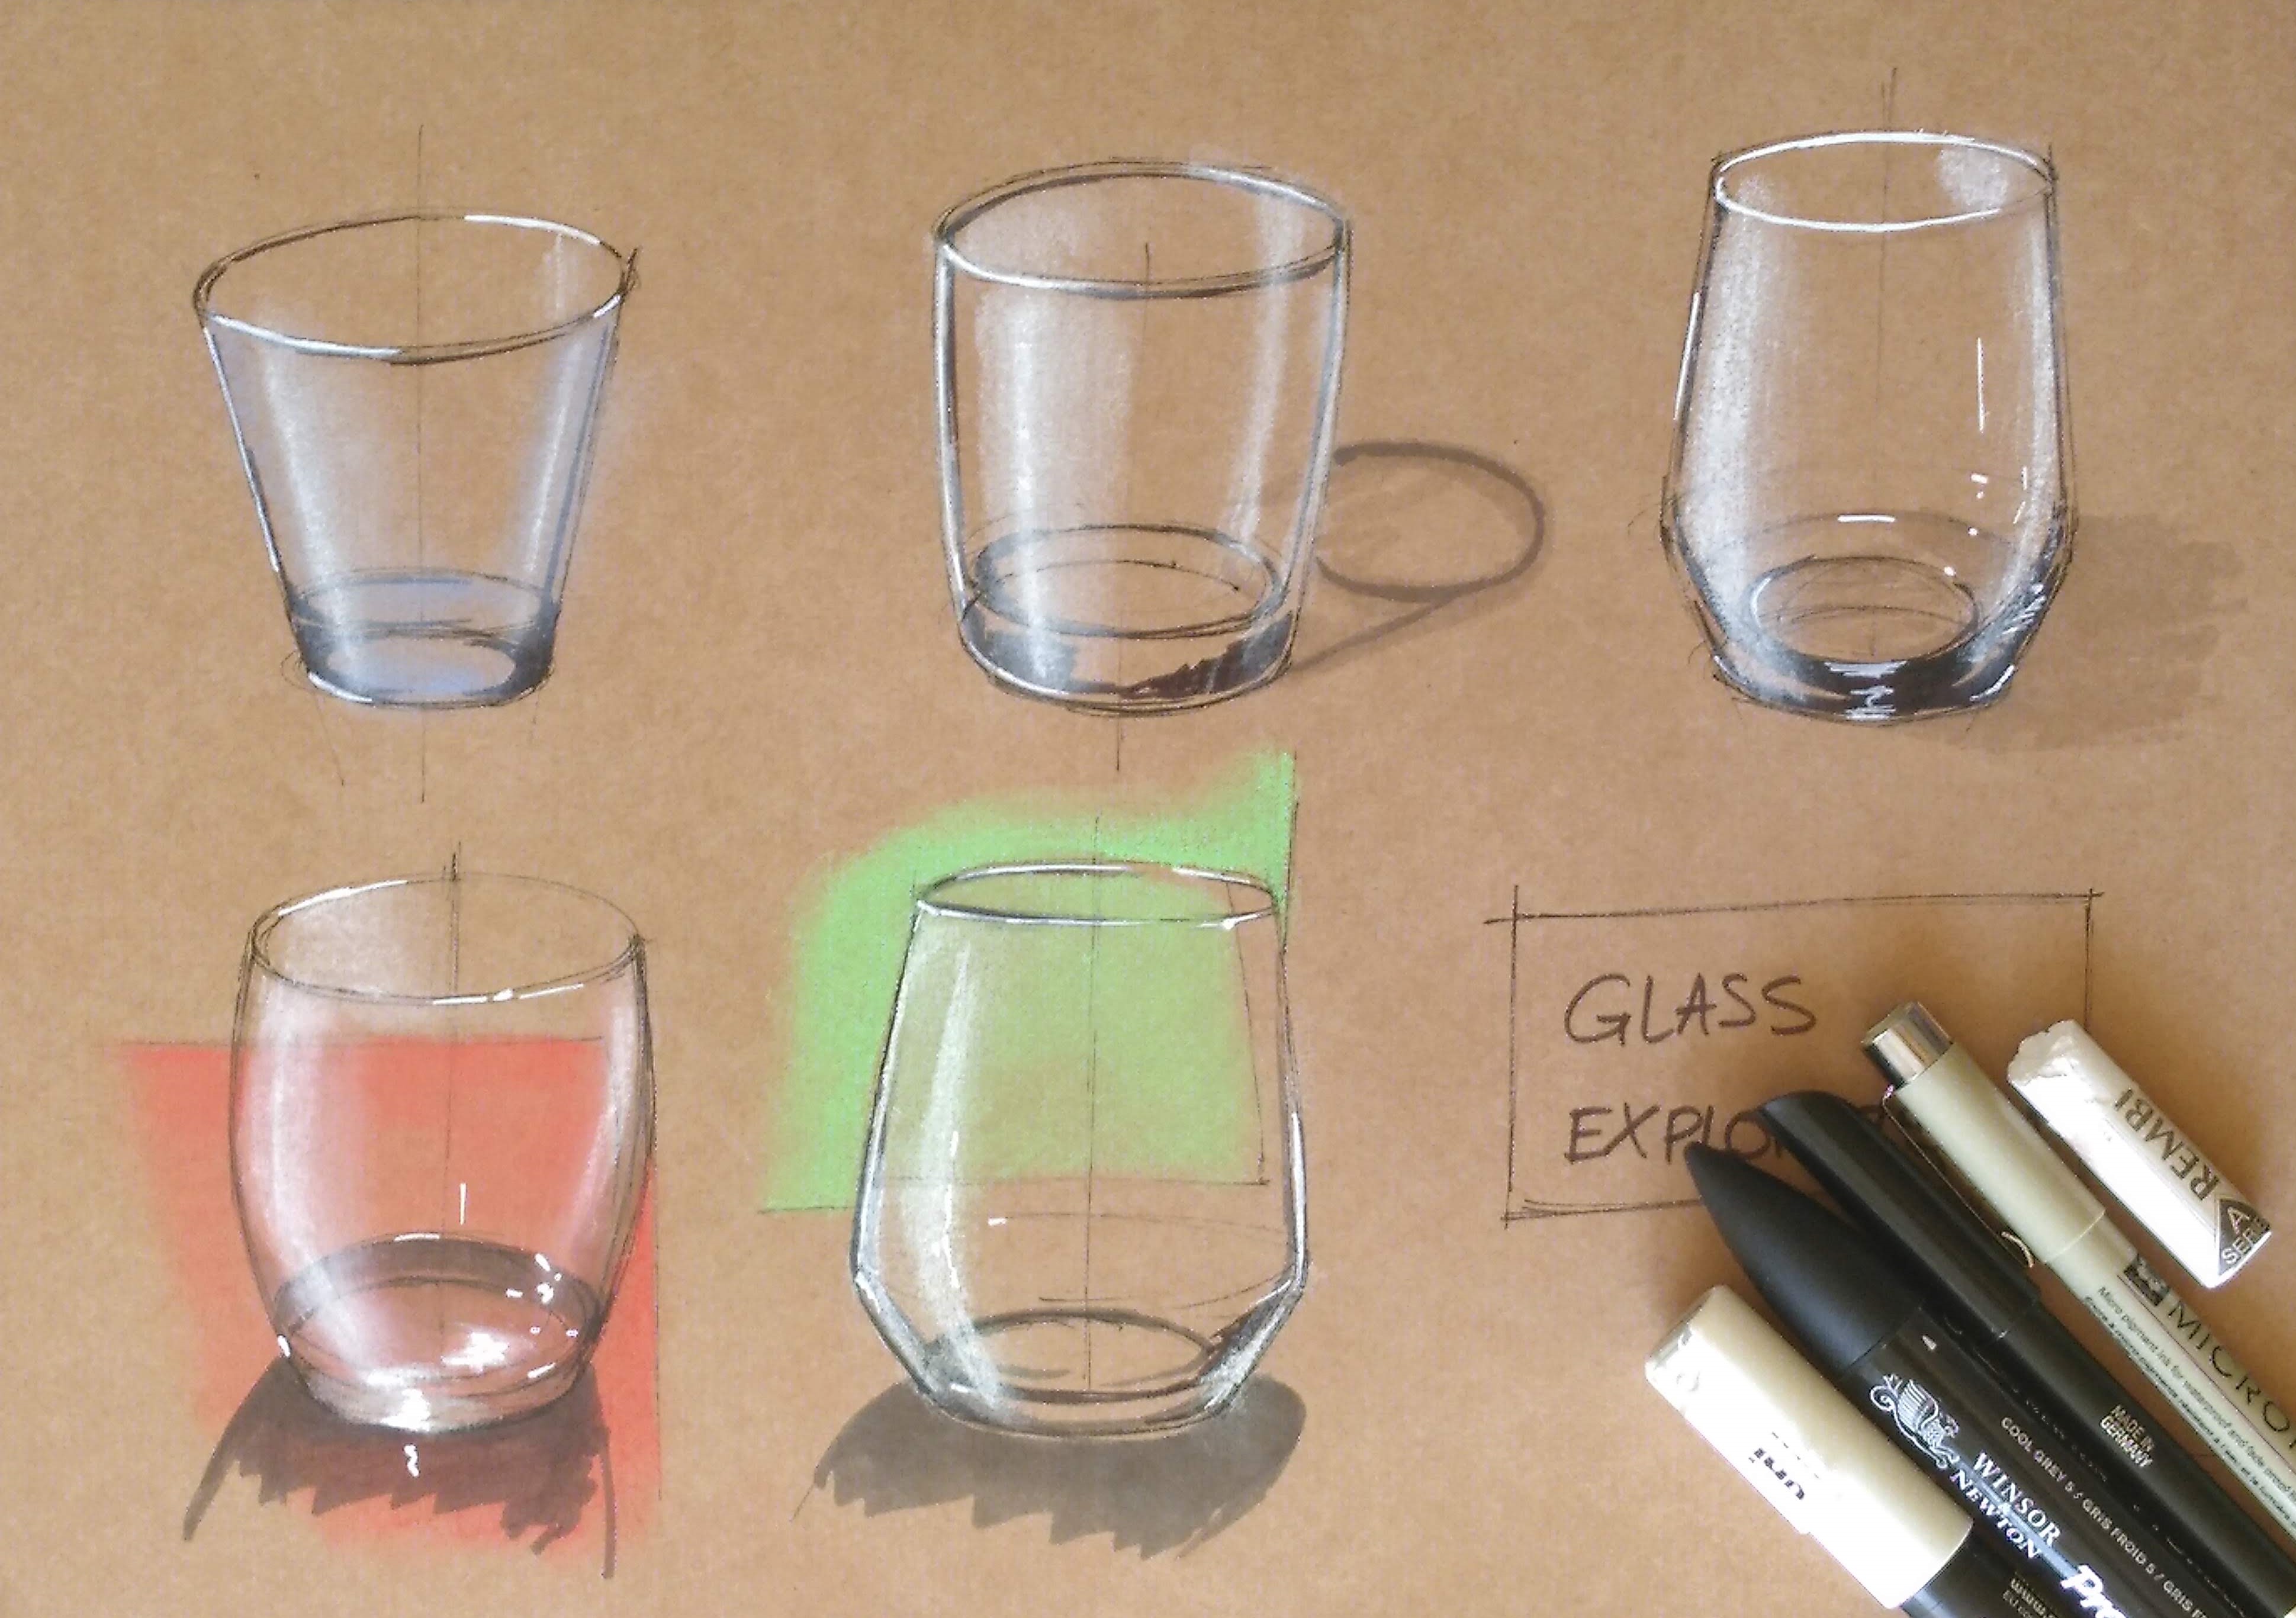 3 glass exploration